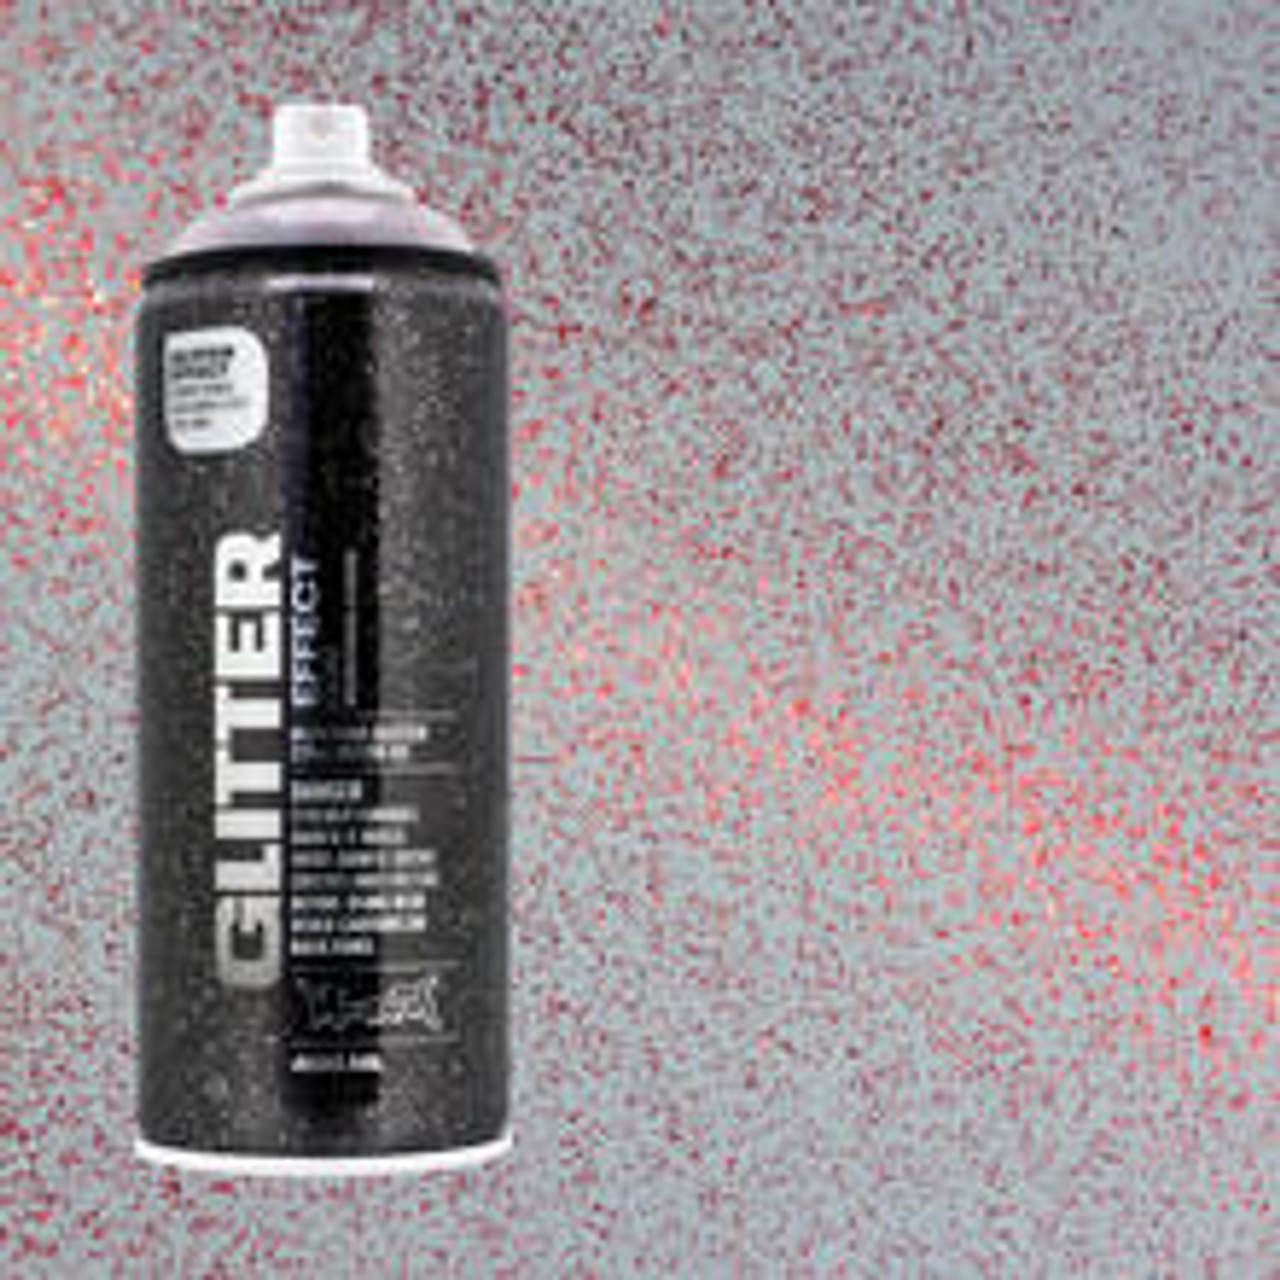 Montana METALLIC EFFECT Spray 400ml